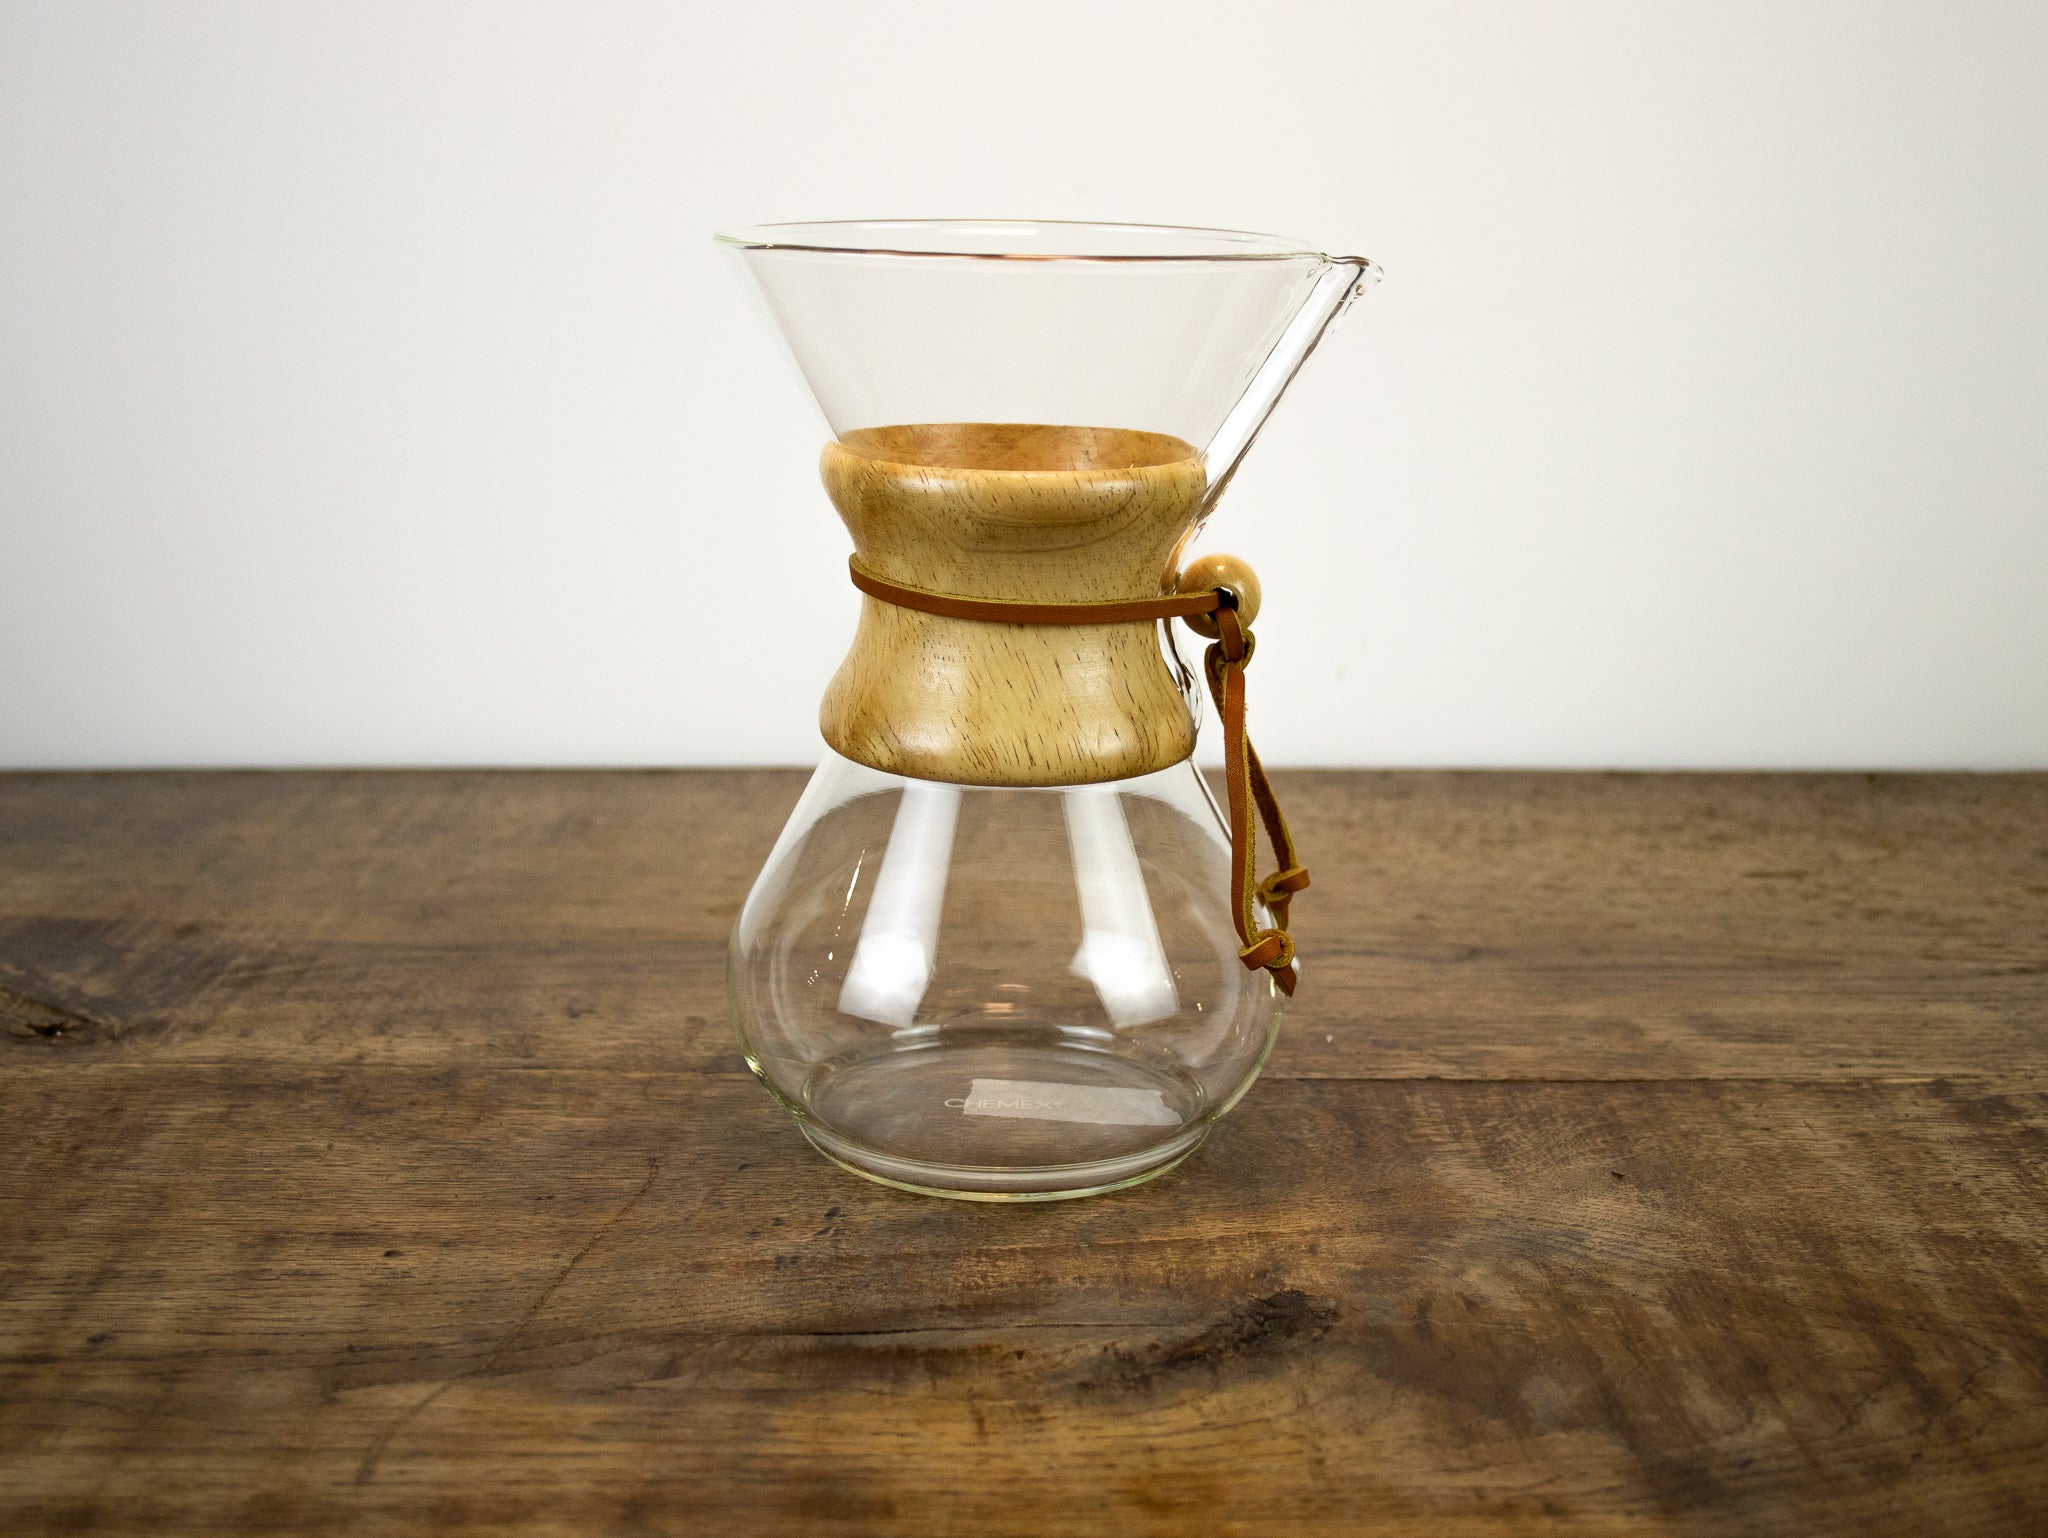 Chemex Coffee Maker - 6 cup with Handle - Kéan Coffee